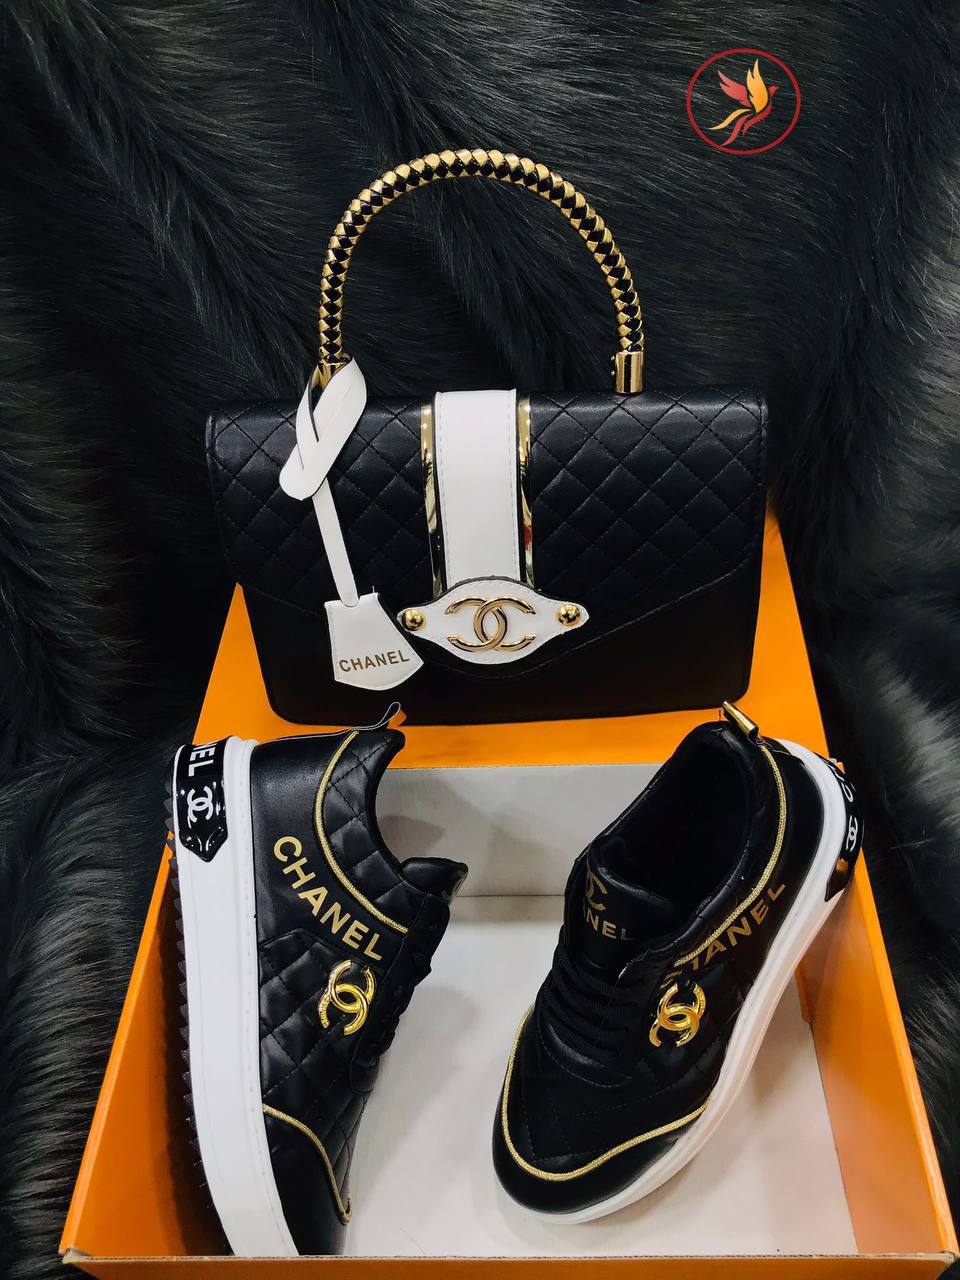 Chanel minion sneakers and handbag